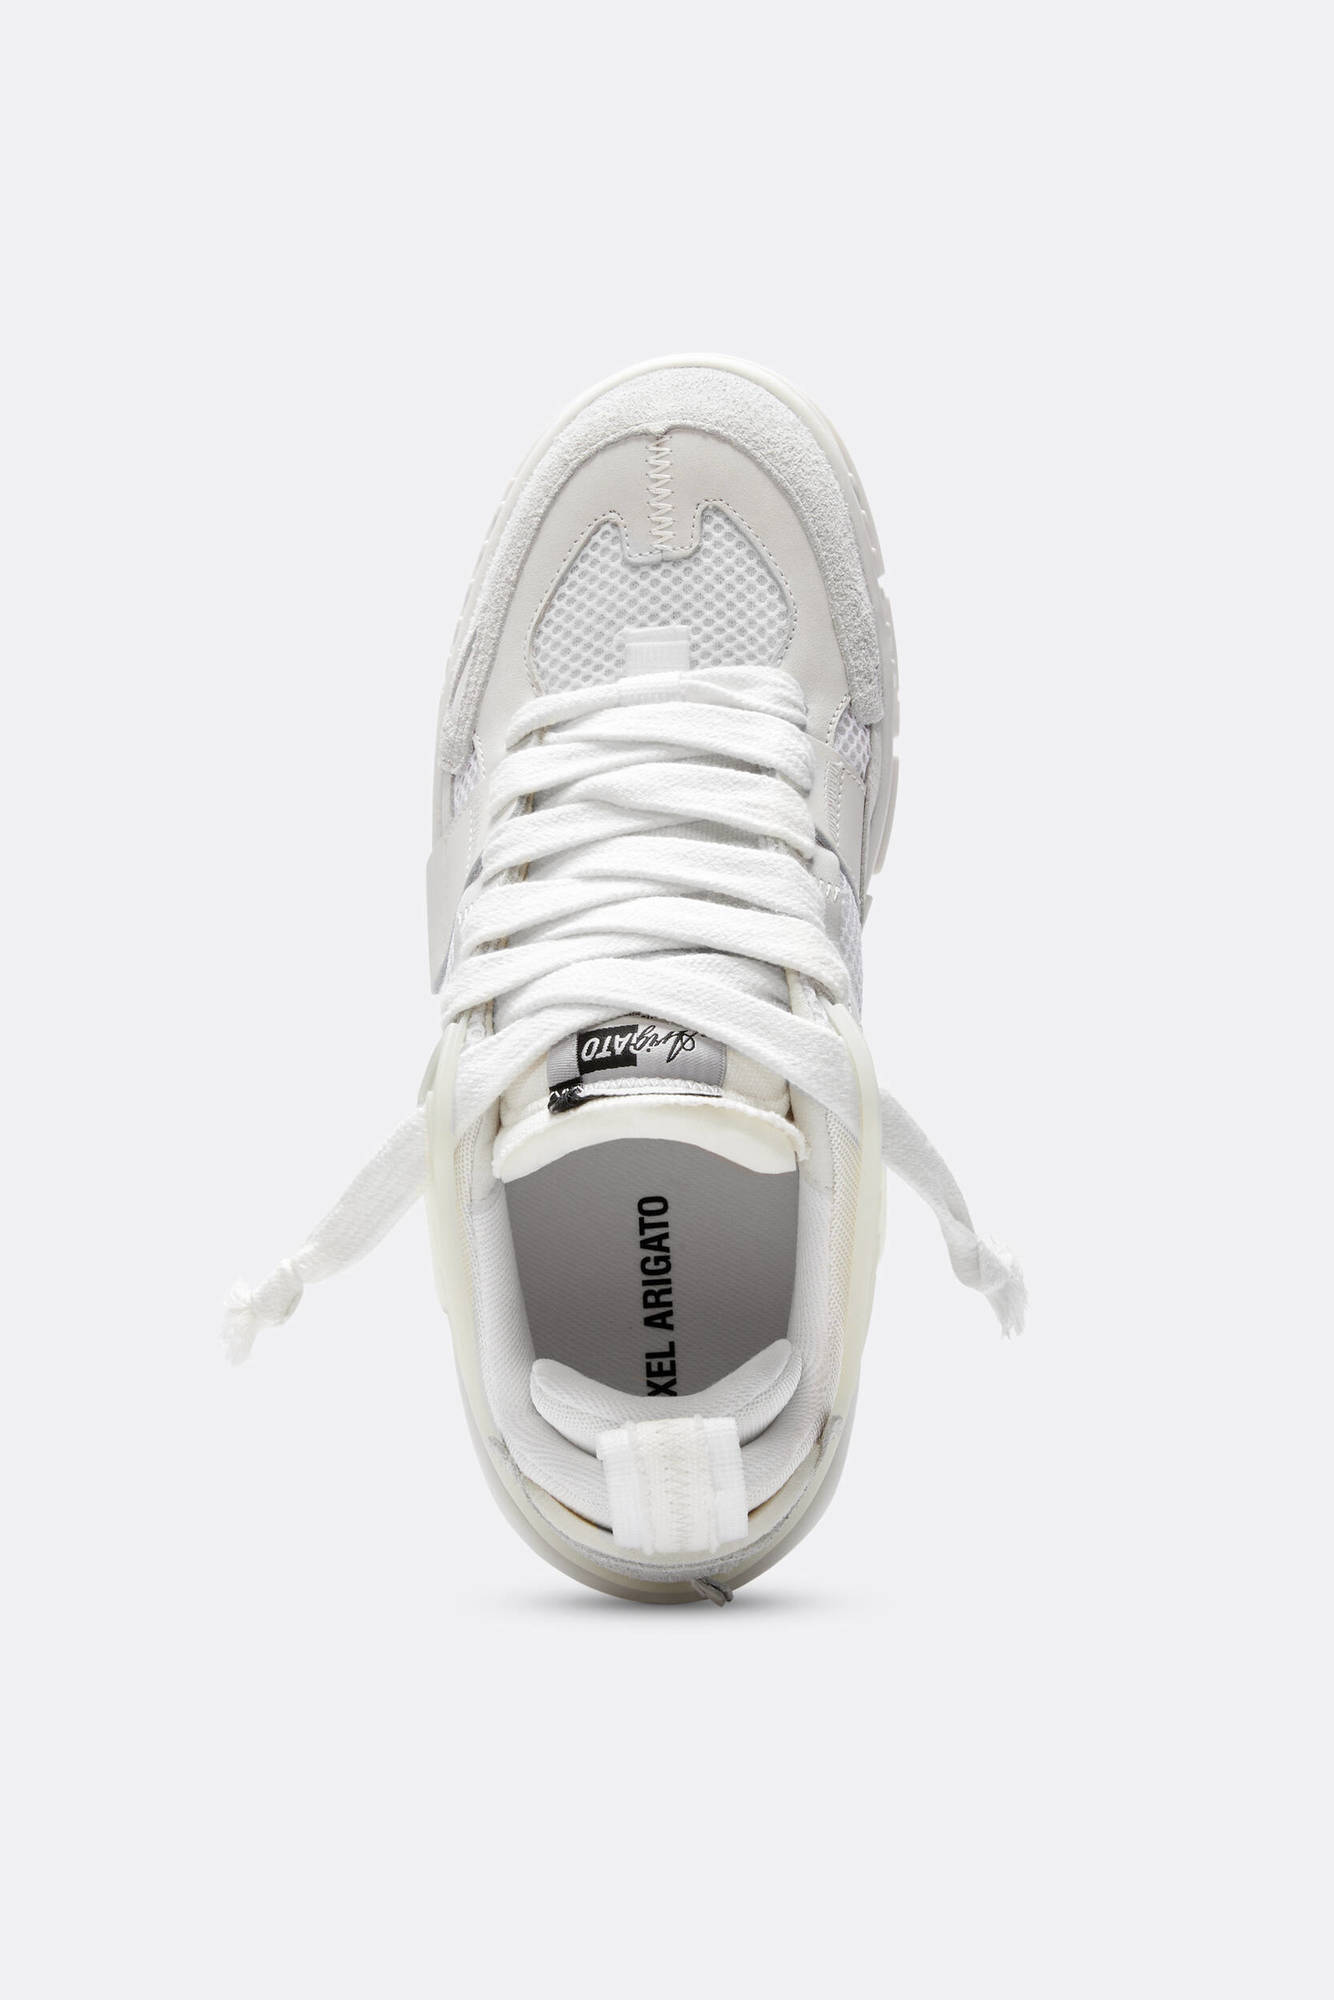 AXEL ARIGATO Area Patchwork Sneaker in White/White 42